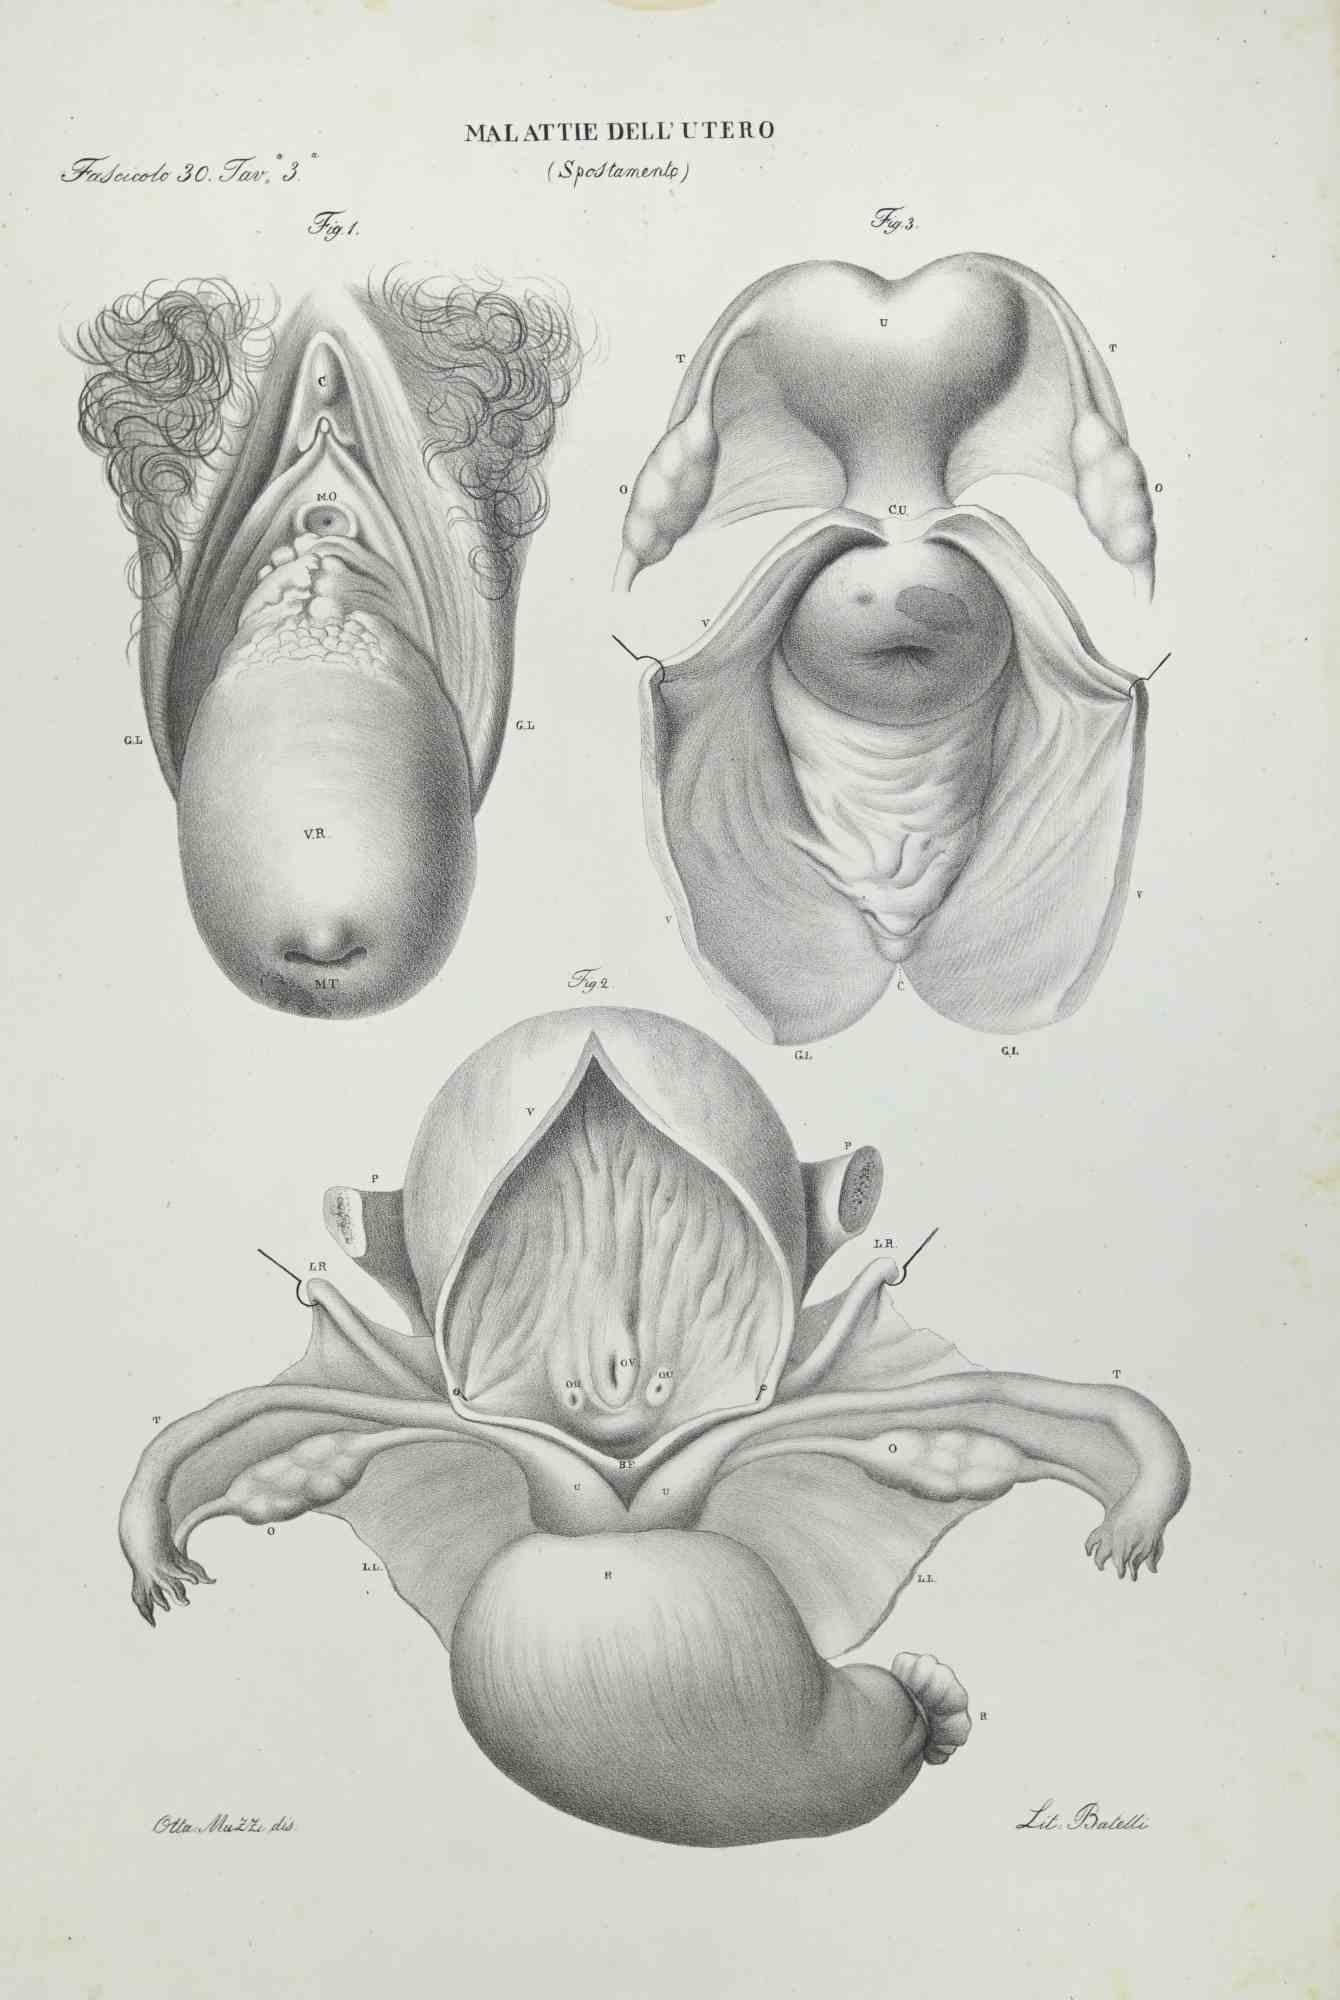 Les maladies du utérus - Lithographie d'Ottavio Muzzi - 1843